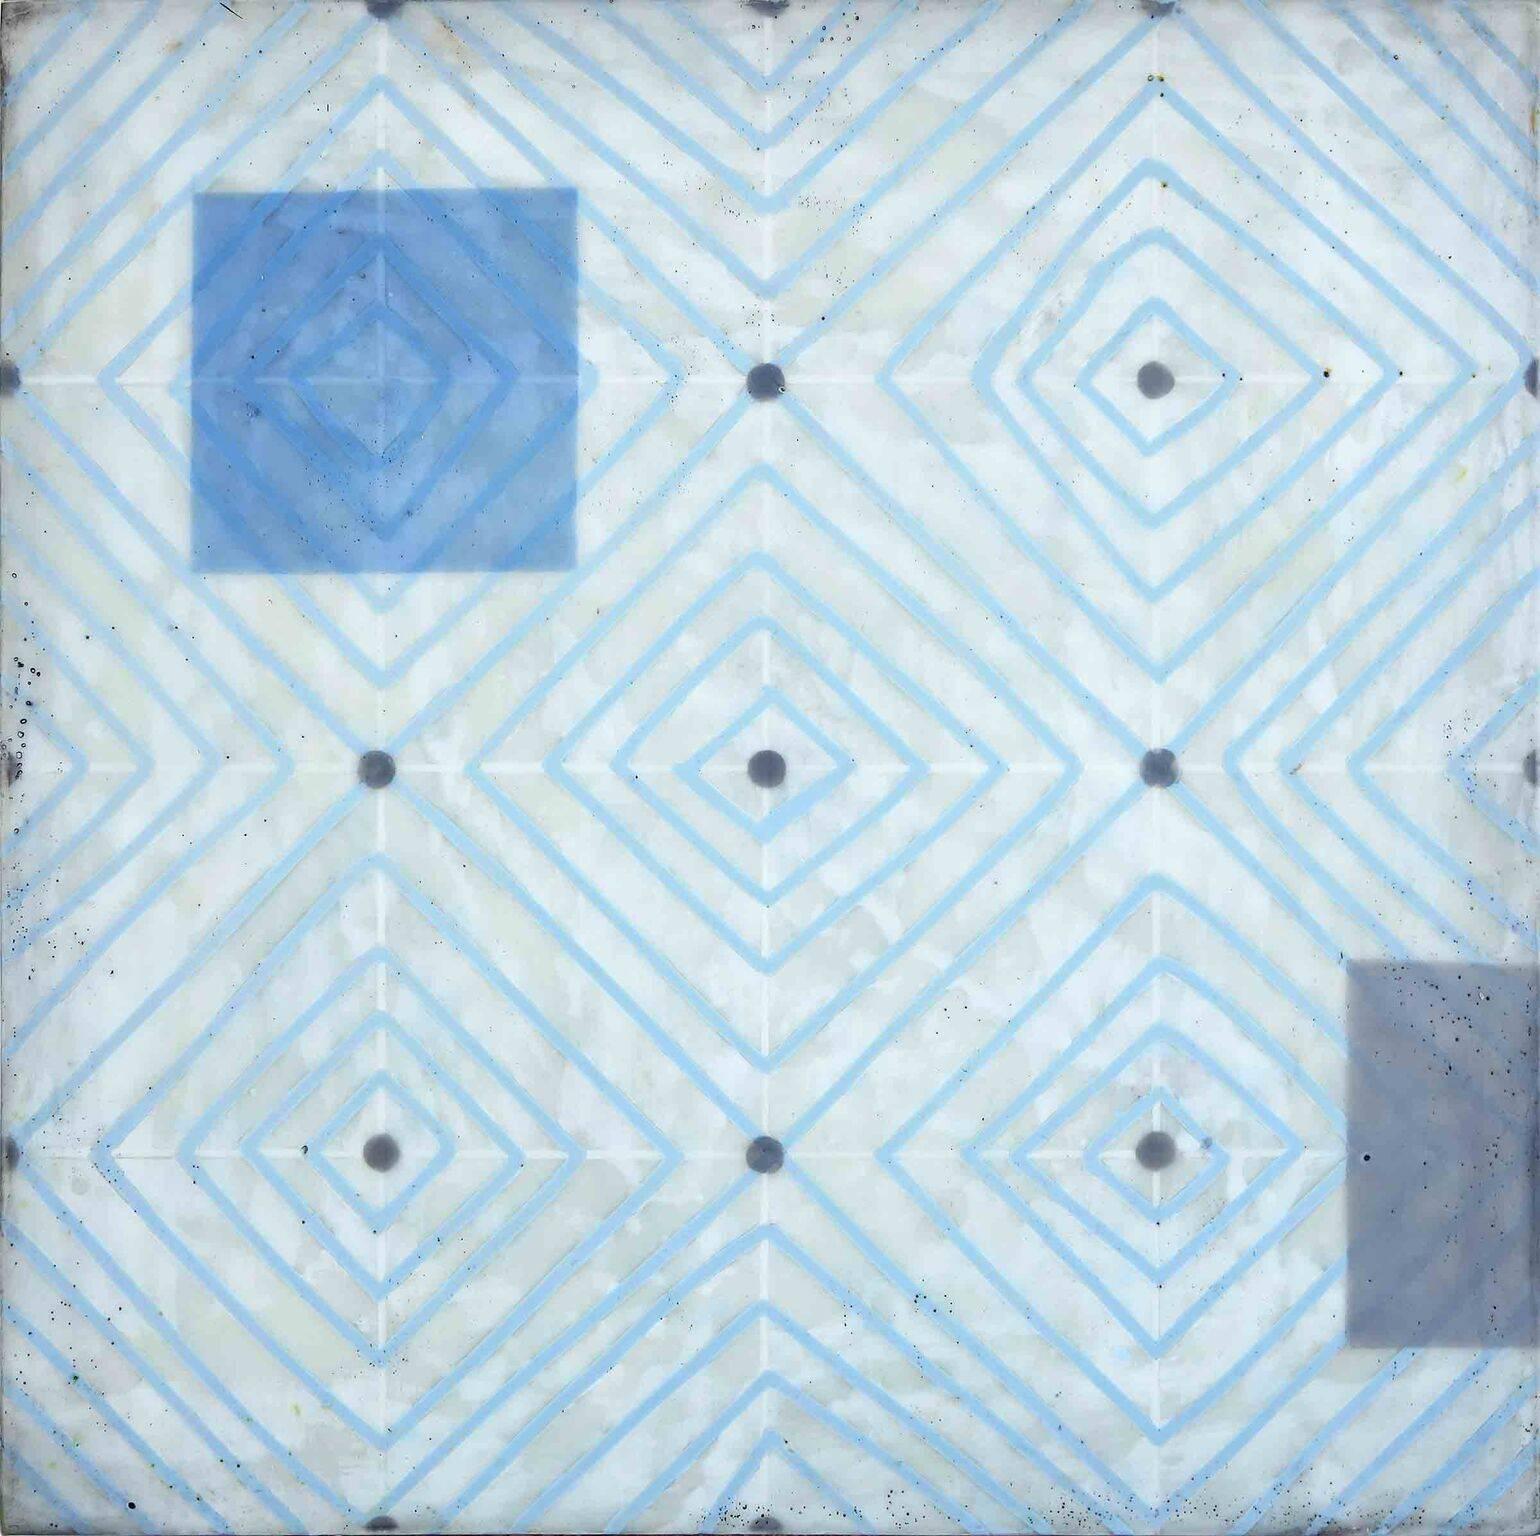 Diamonds 3 (Minimal Blue and White Square Encaustic Work on Panel)